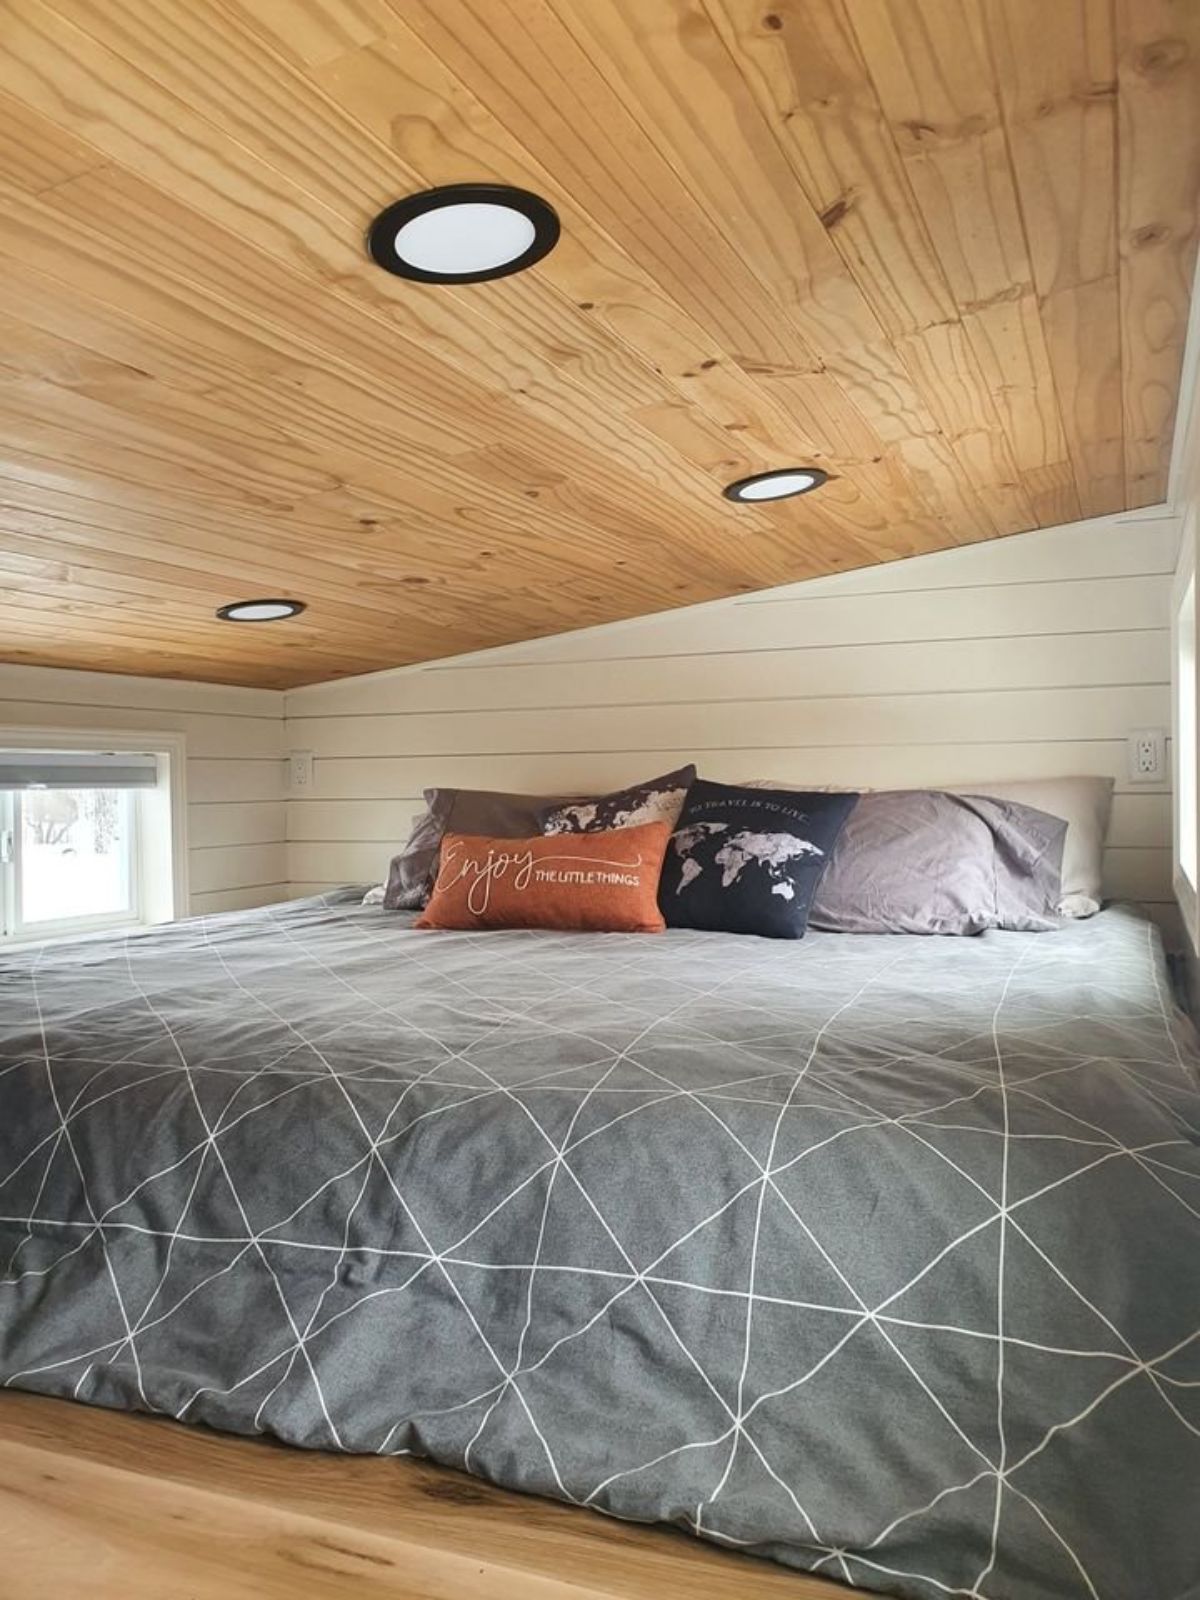 Bedroom of Dual-Lofted House On Wheels